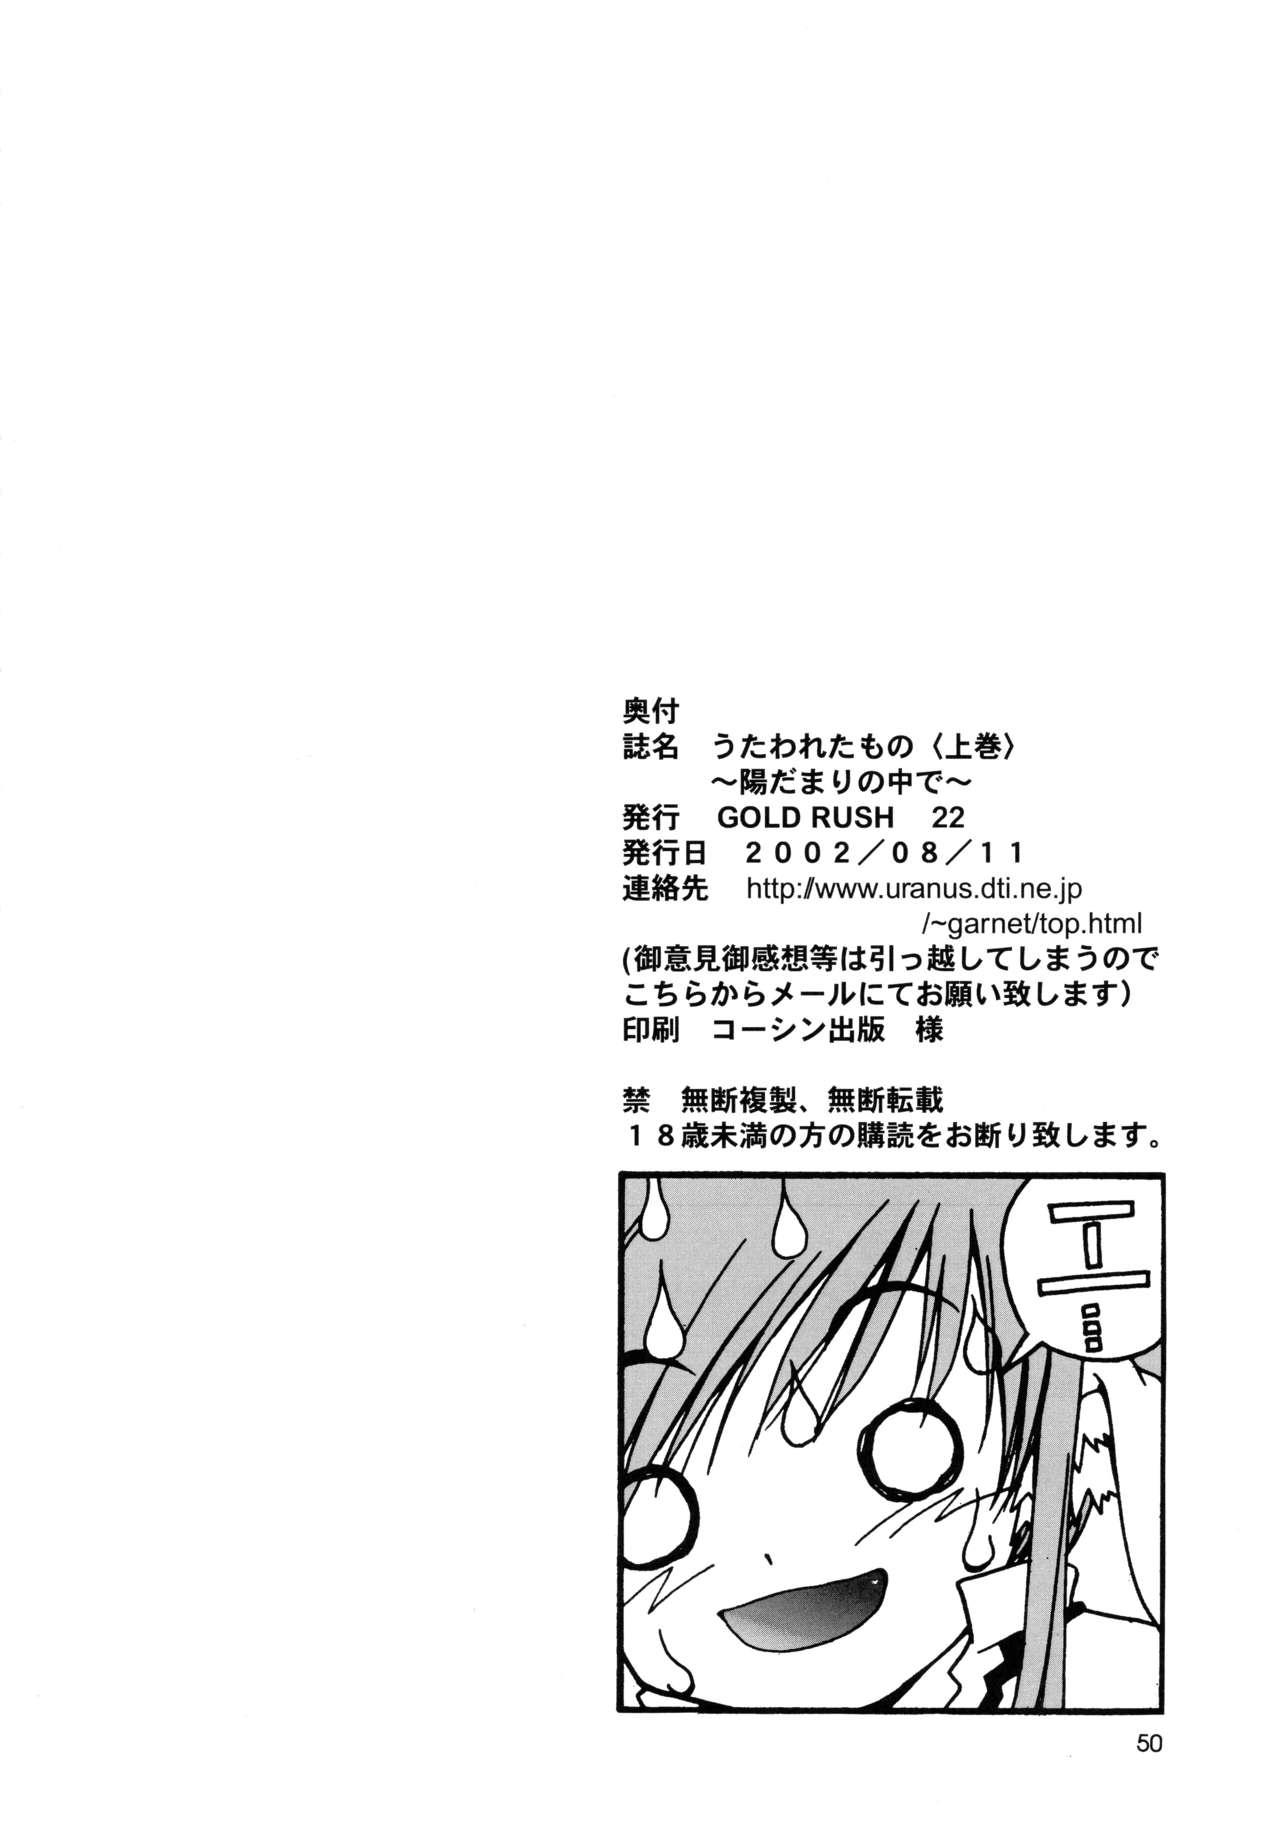 Boobies Utawaretamono <Joukan> - Utawarerumono Tied - Page 50